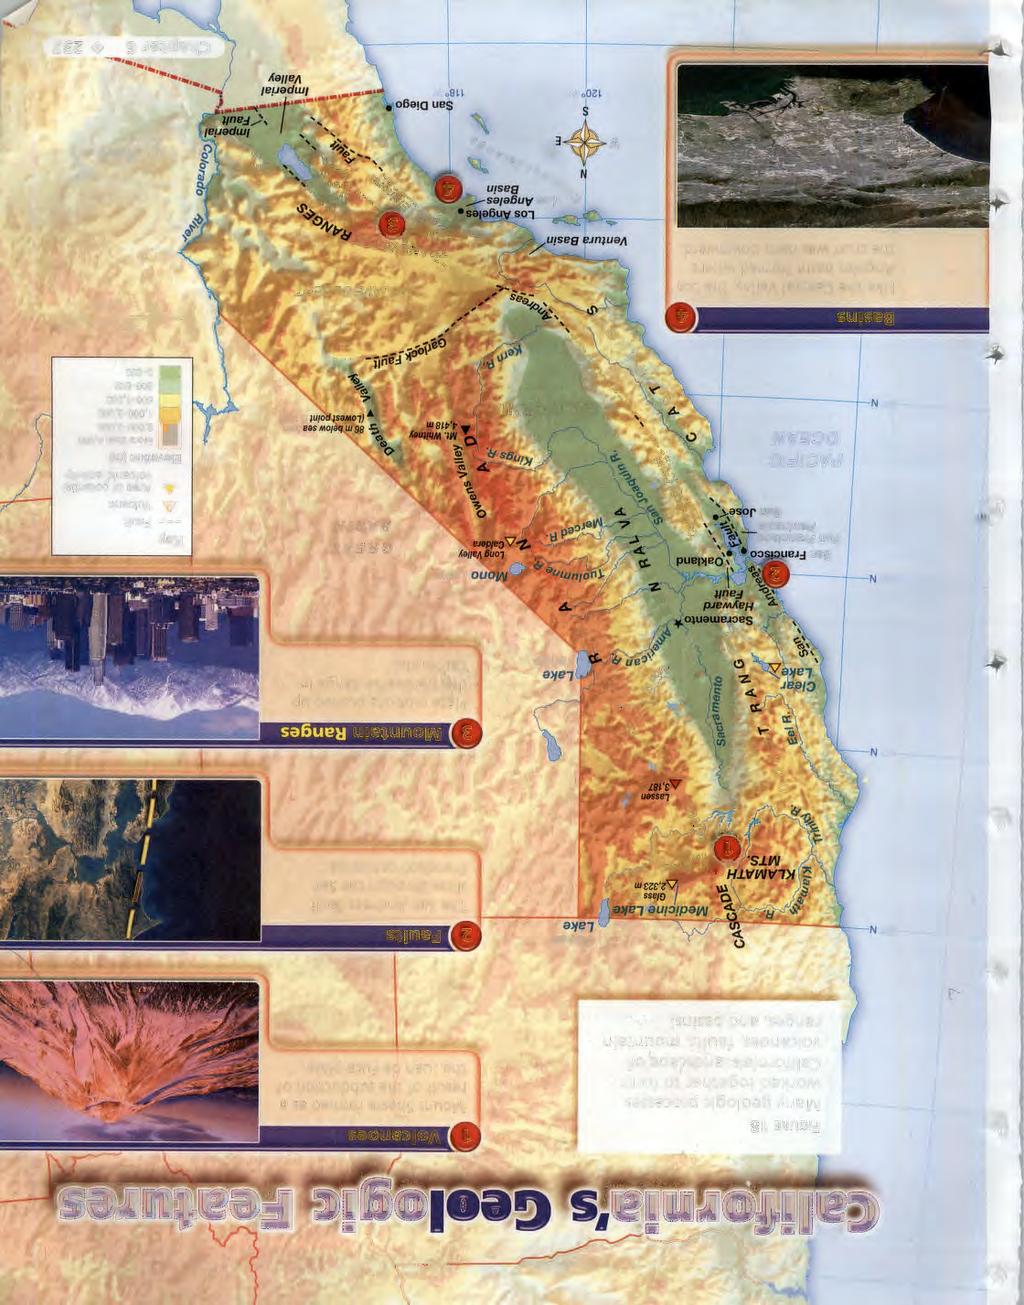 _1 I I I : J ' figure 18 { Many geologic processes worked together to form I California's